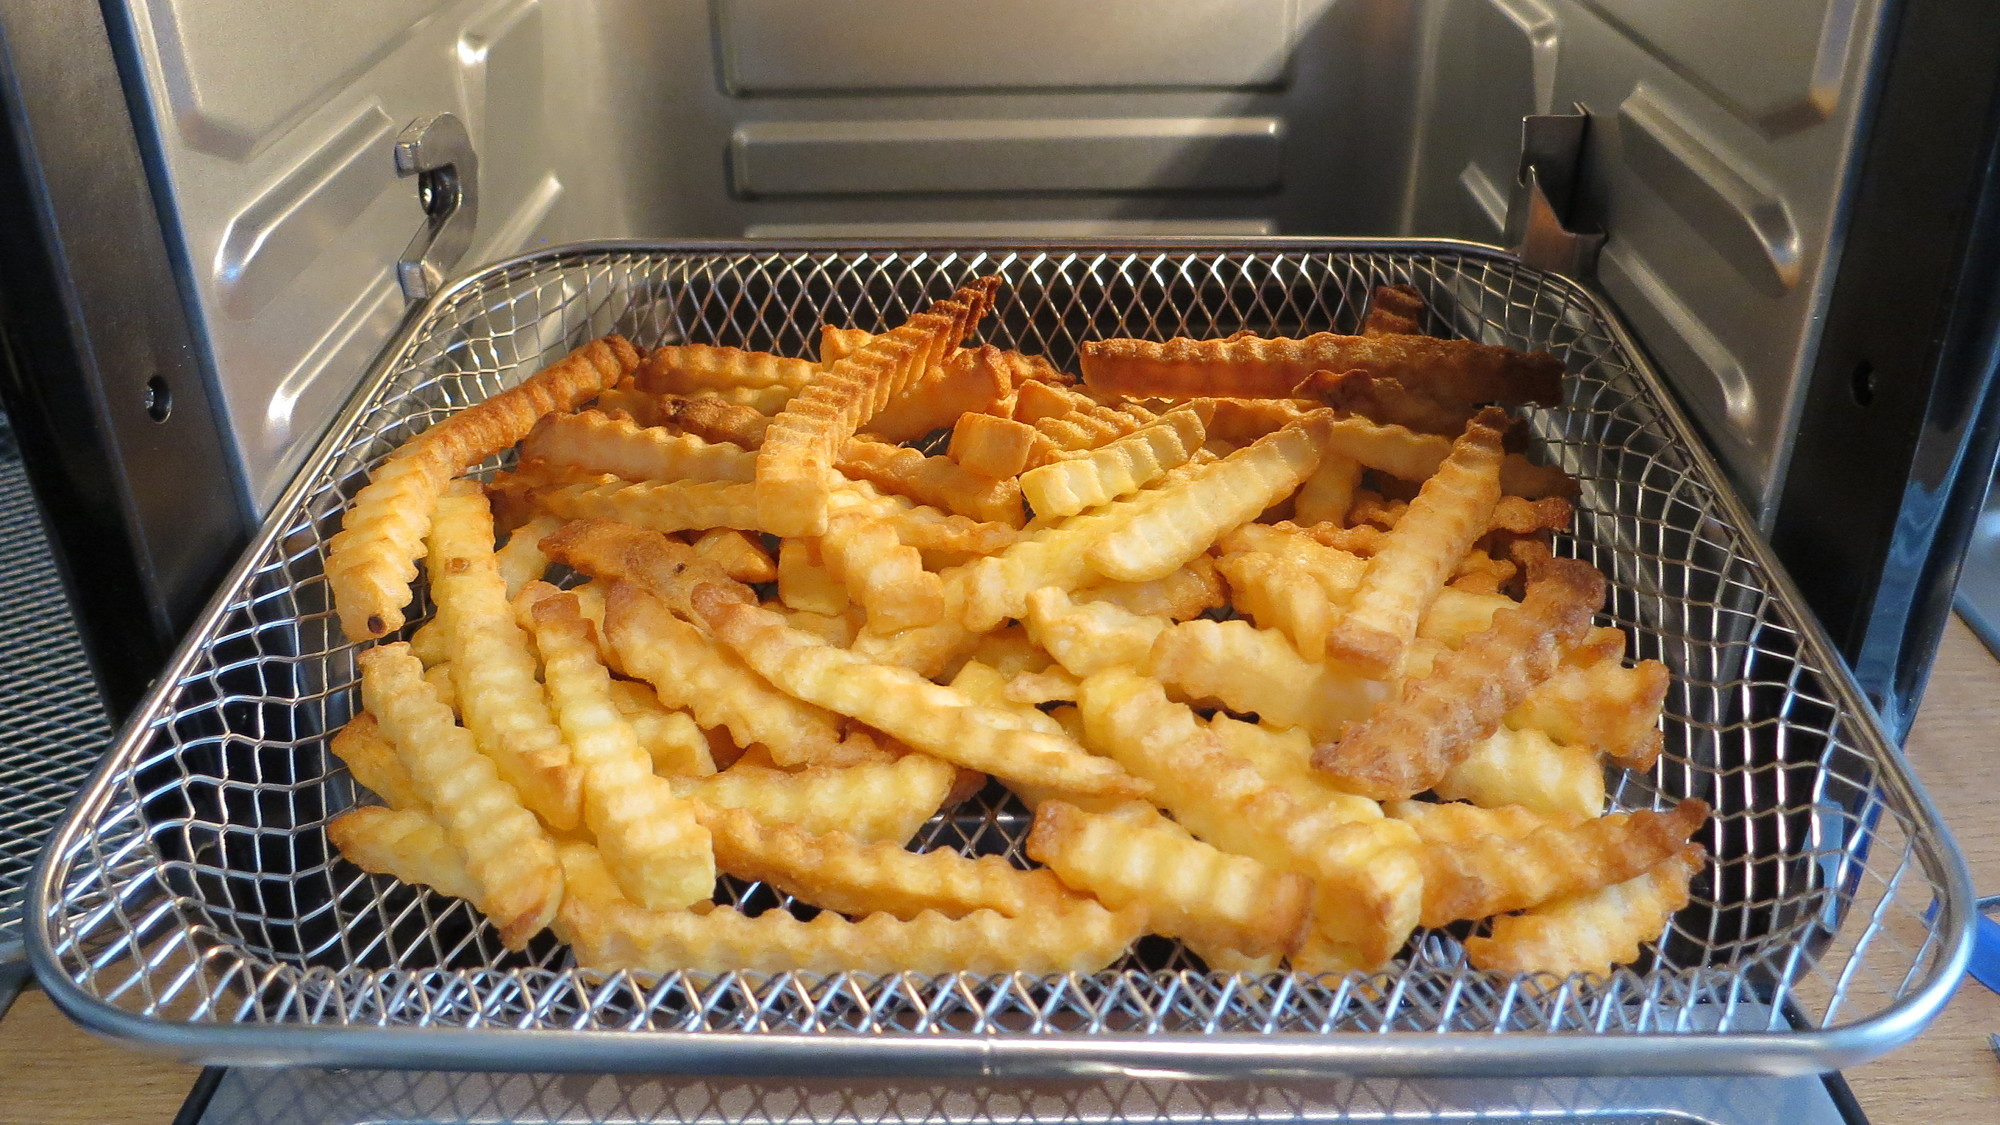 Tefal Easy Test Ofen Heißluft & mit Grill: Oven Fry im